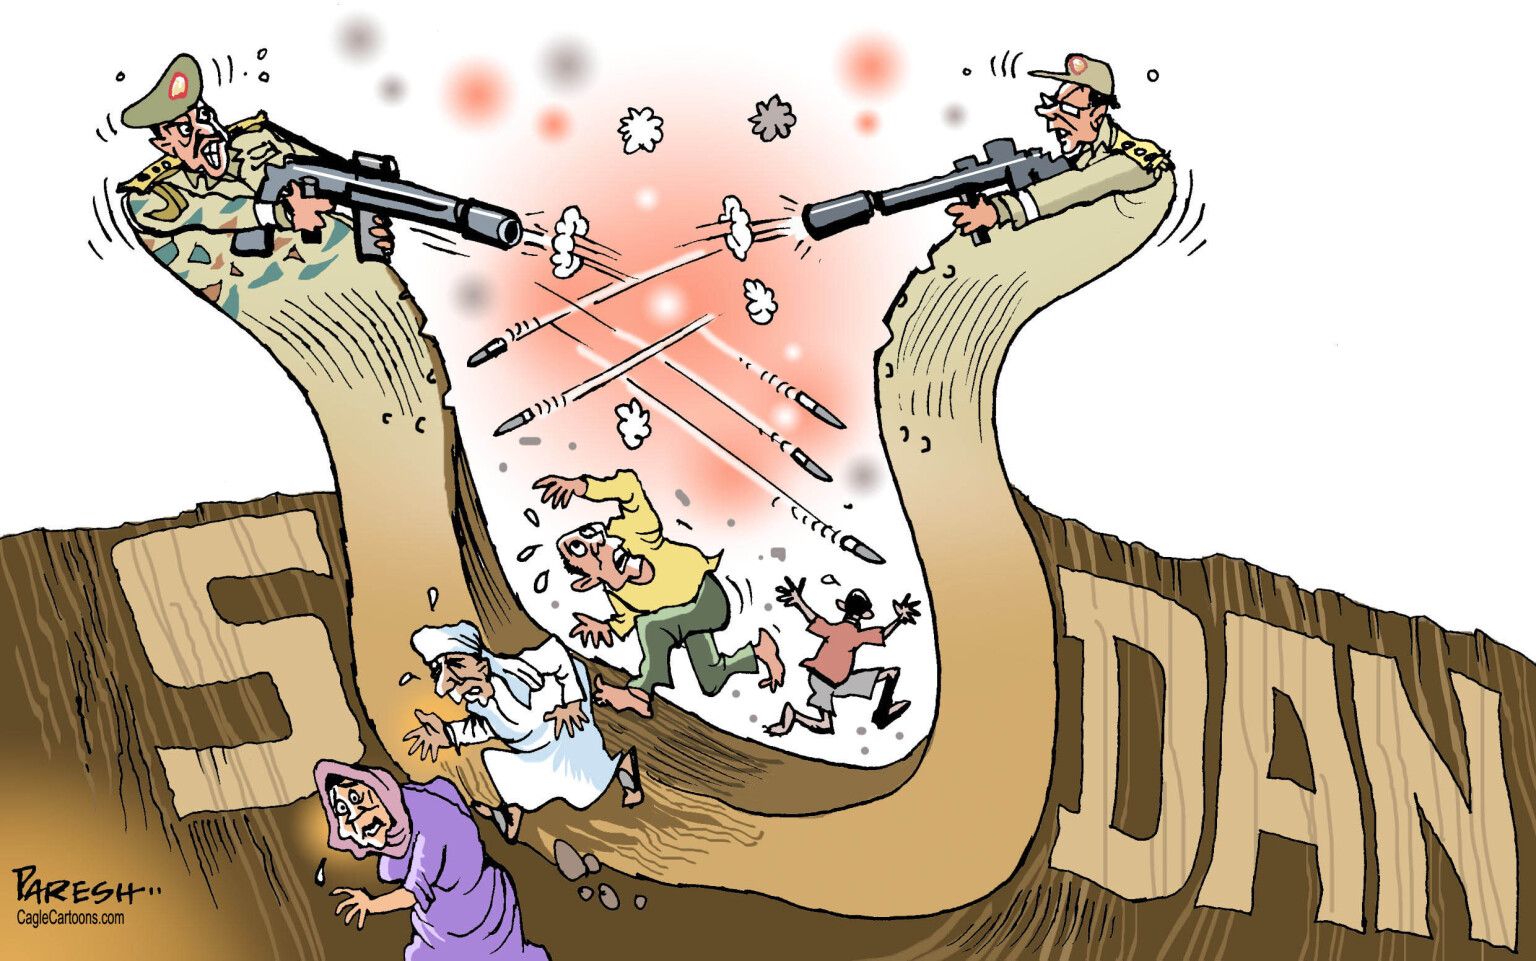 Sudan fighting - newsjustin.press - editorial political cartoon